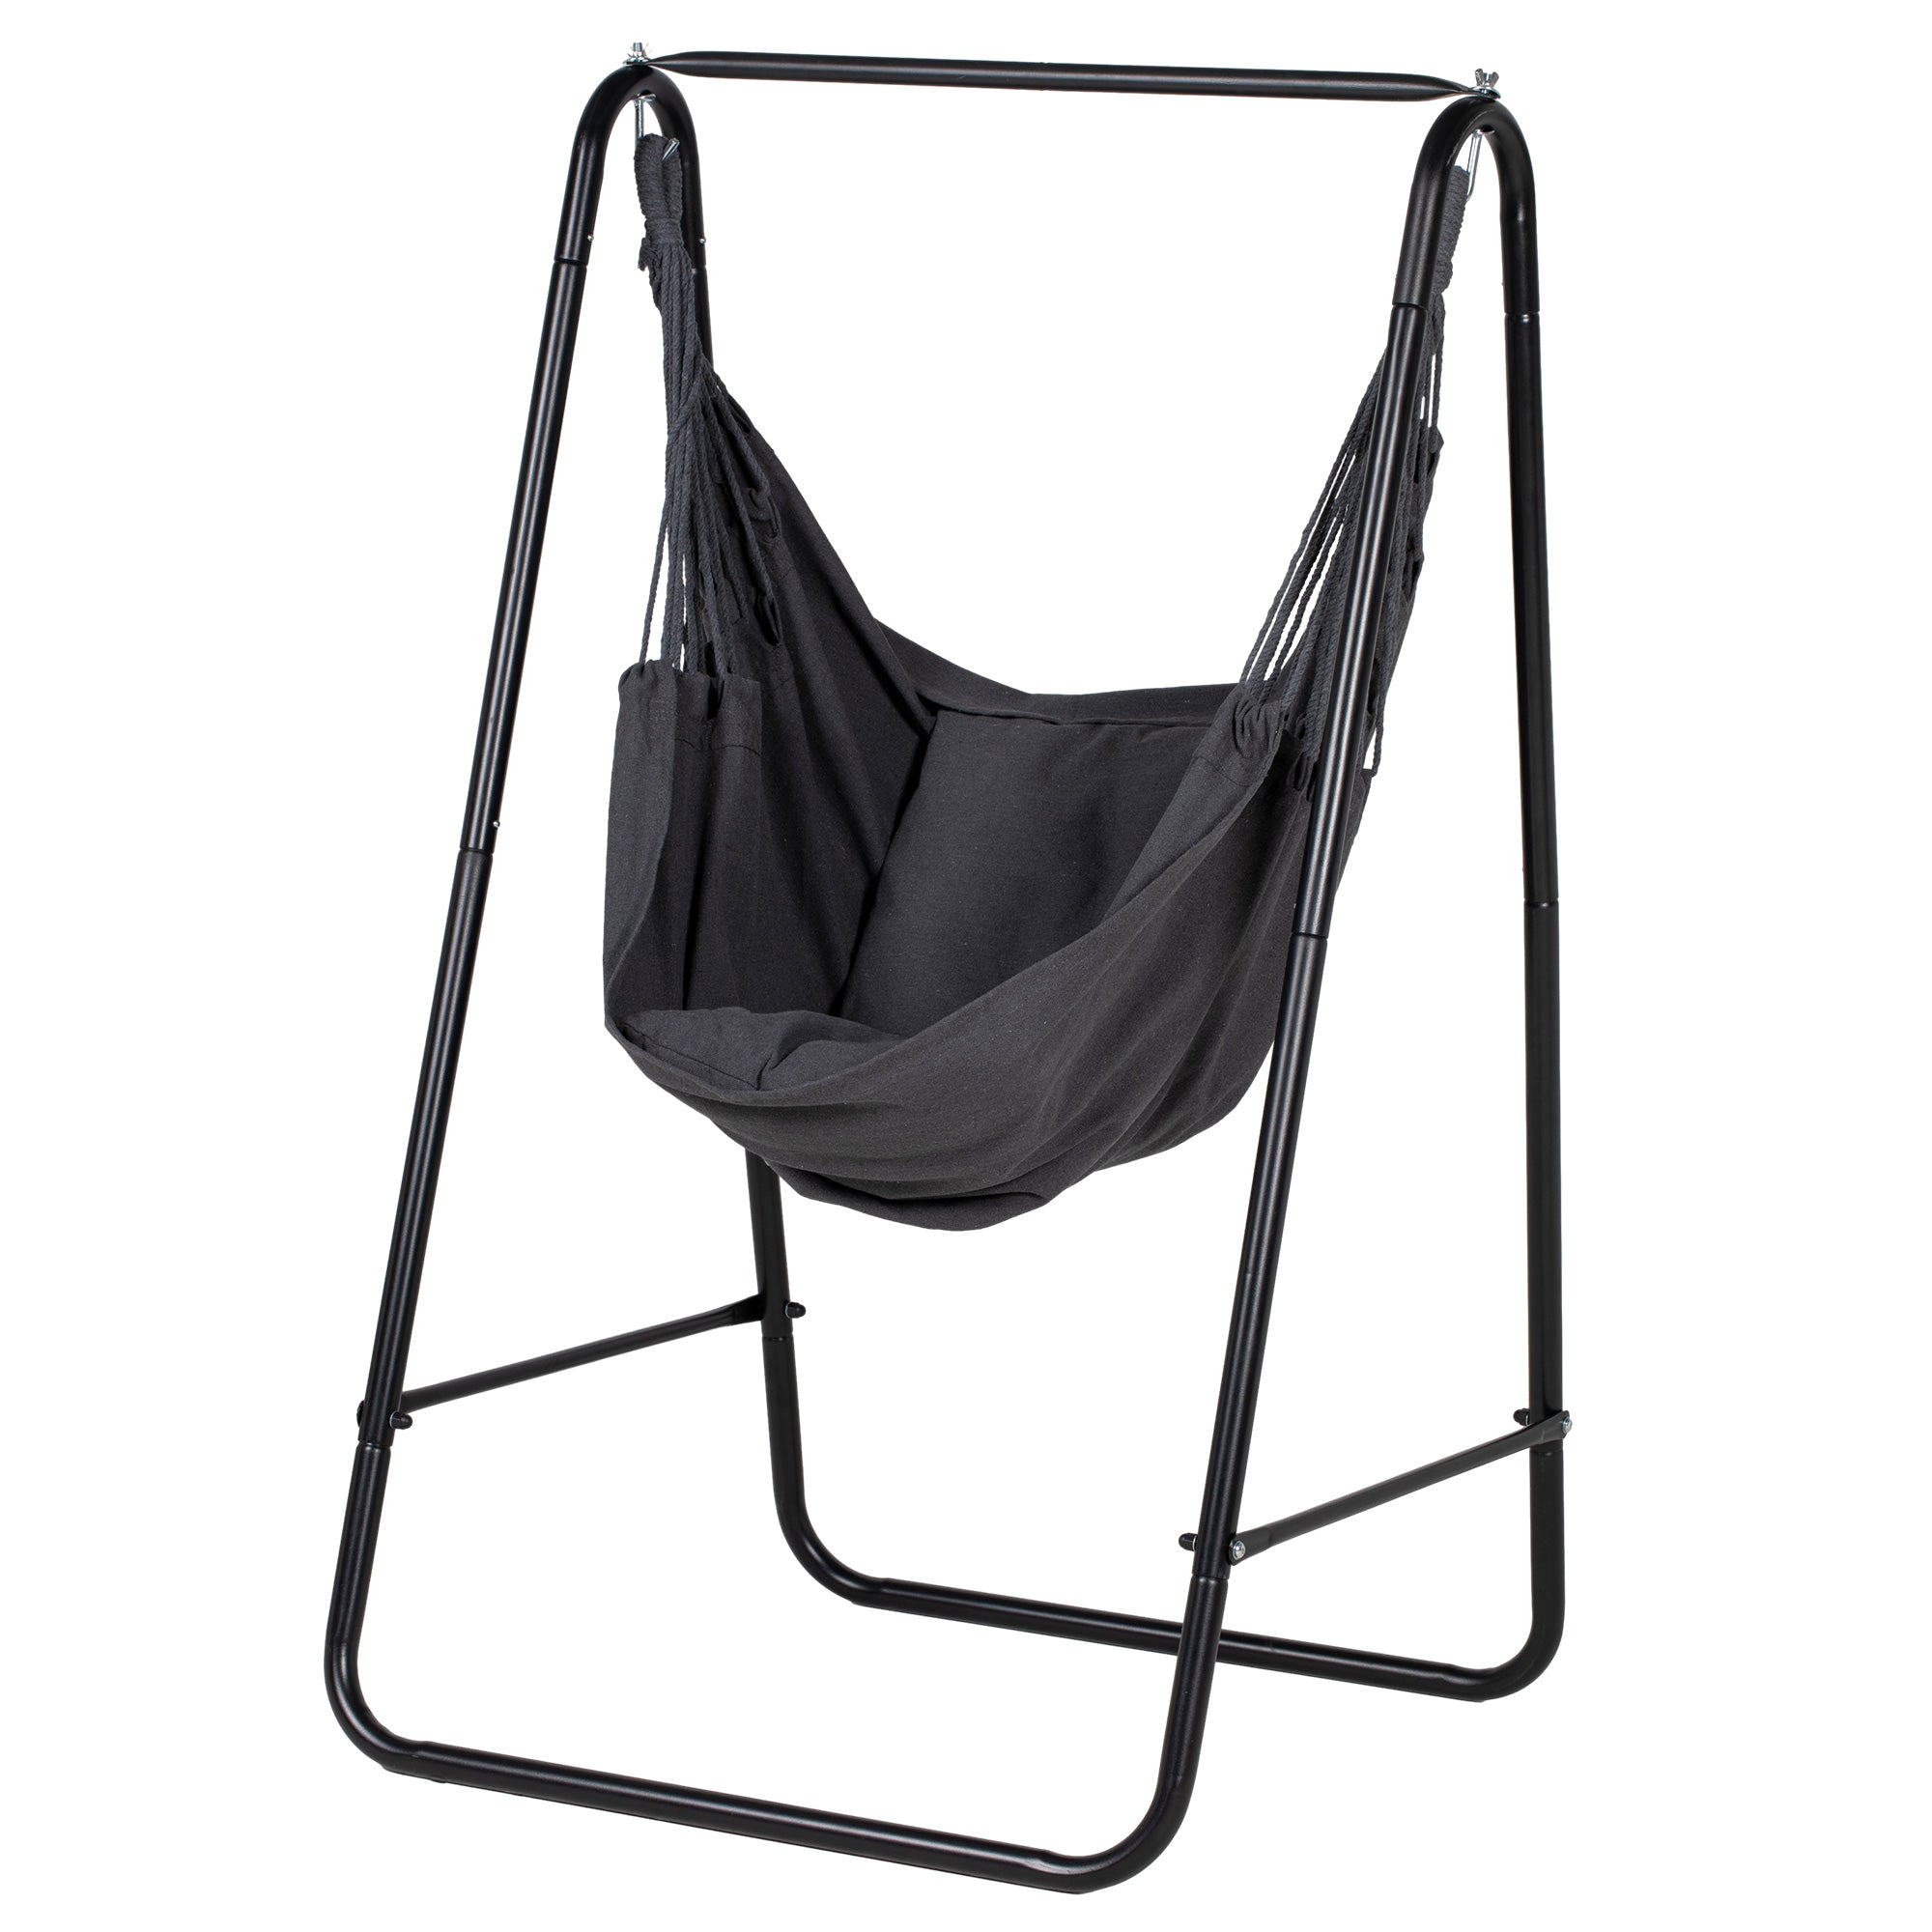 Hammock Chair with Stand, Hammock Swing Chair with Cushion, Dark Grey-0